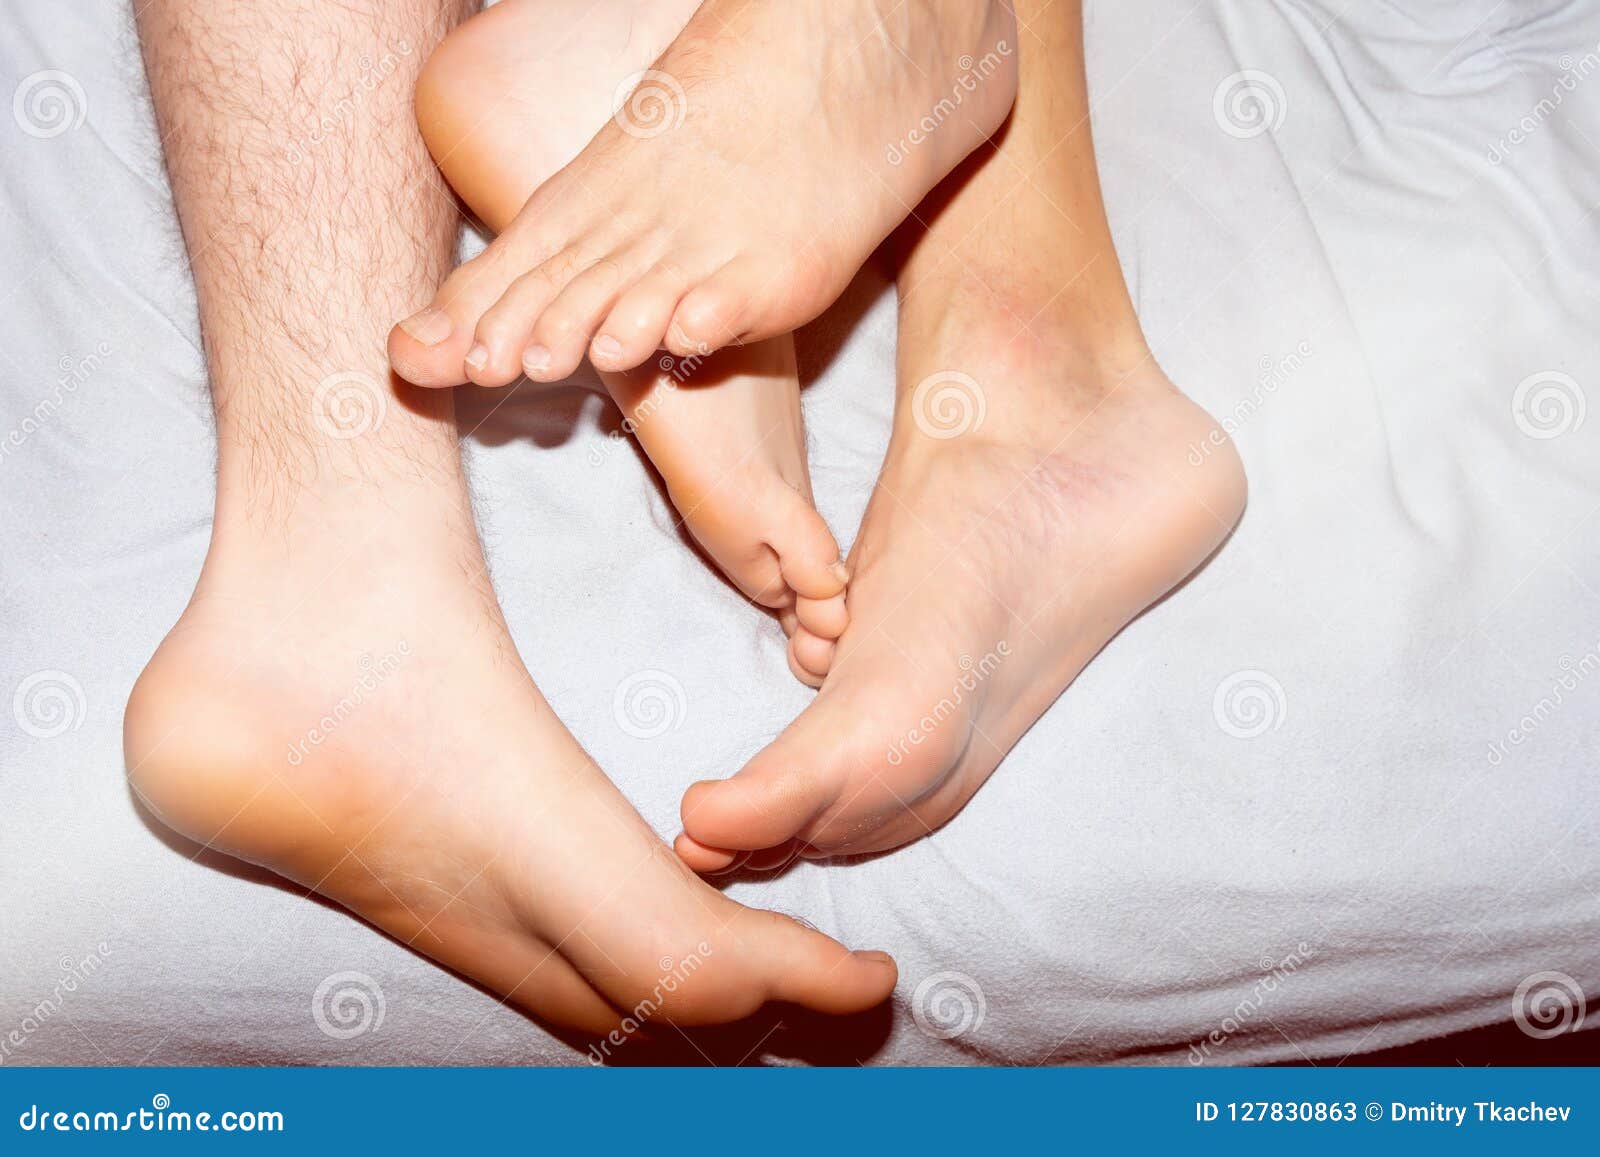 gay men feet close up bed